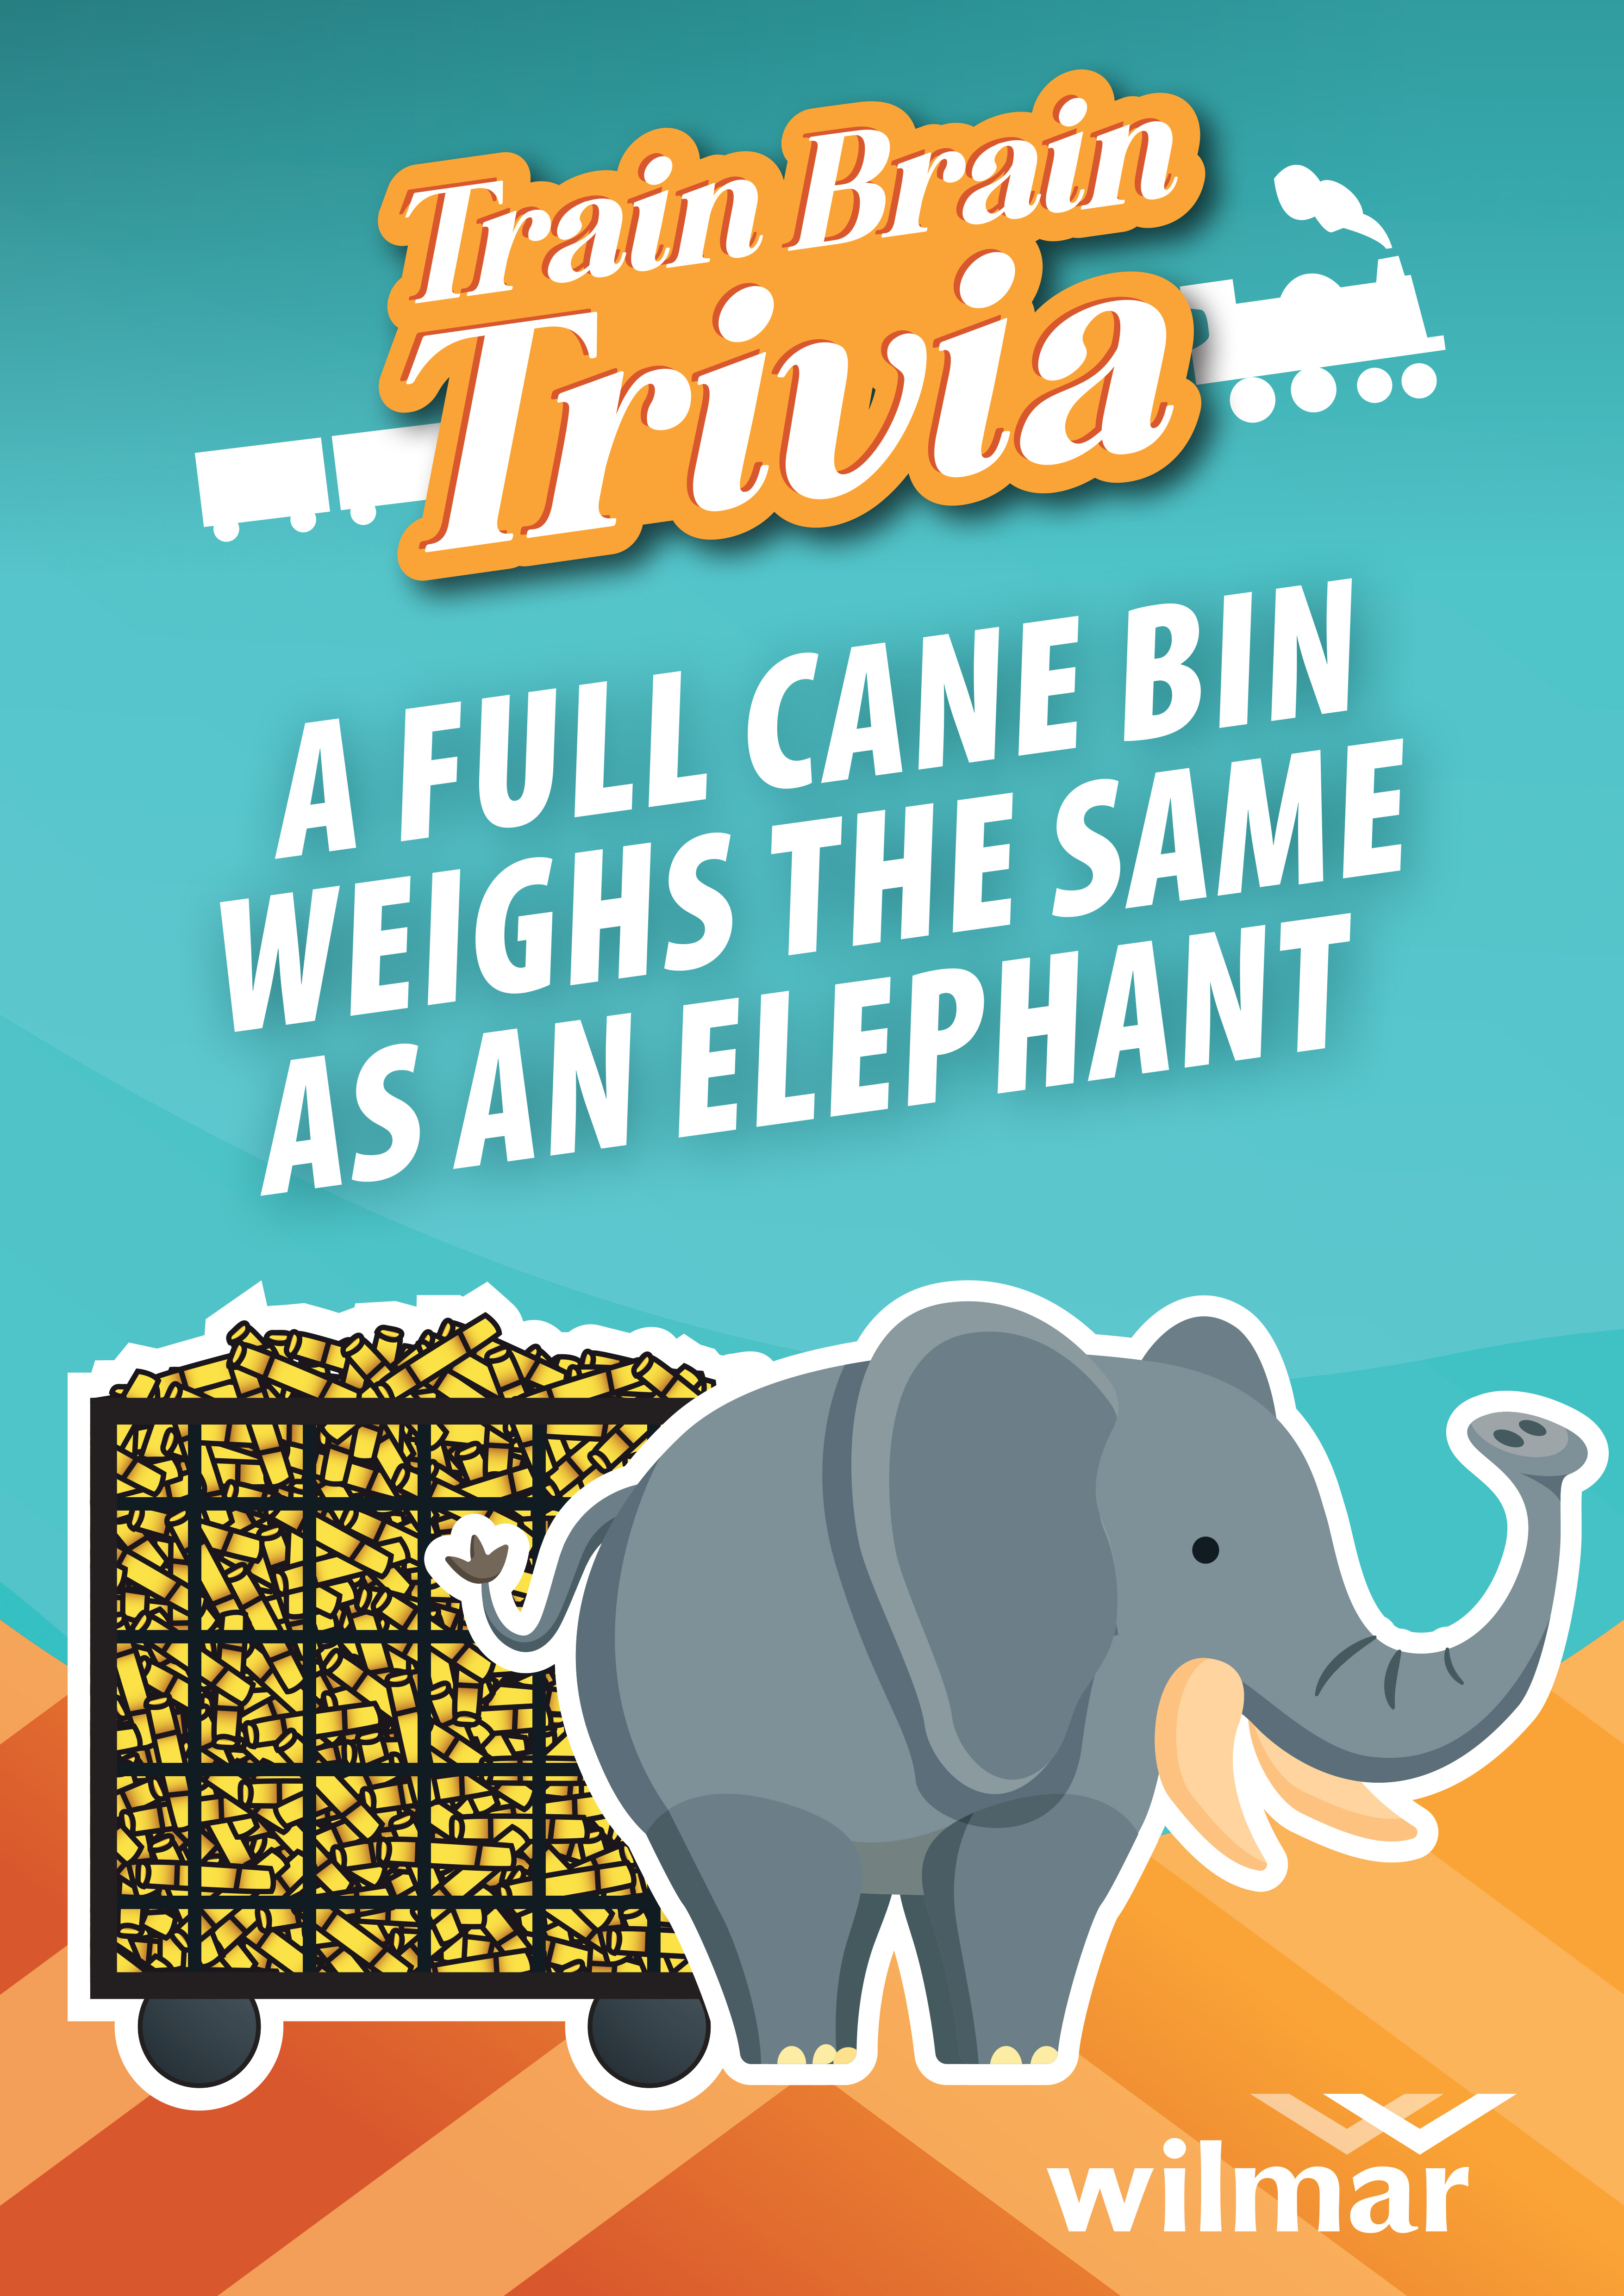 Cane bin = Elephant